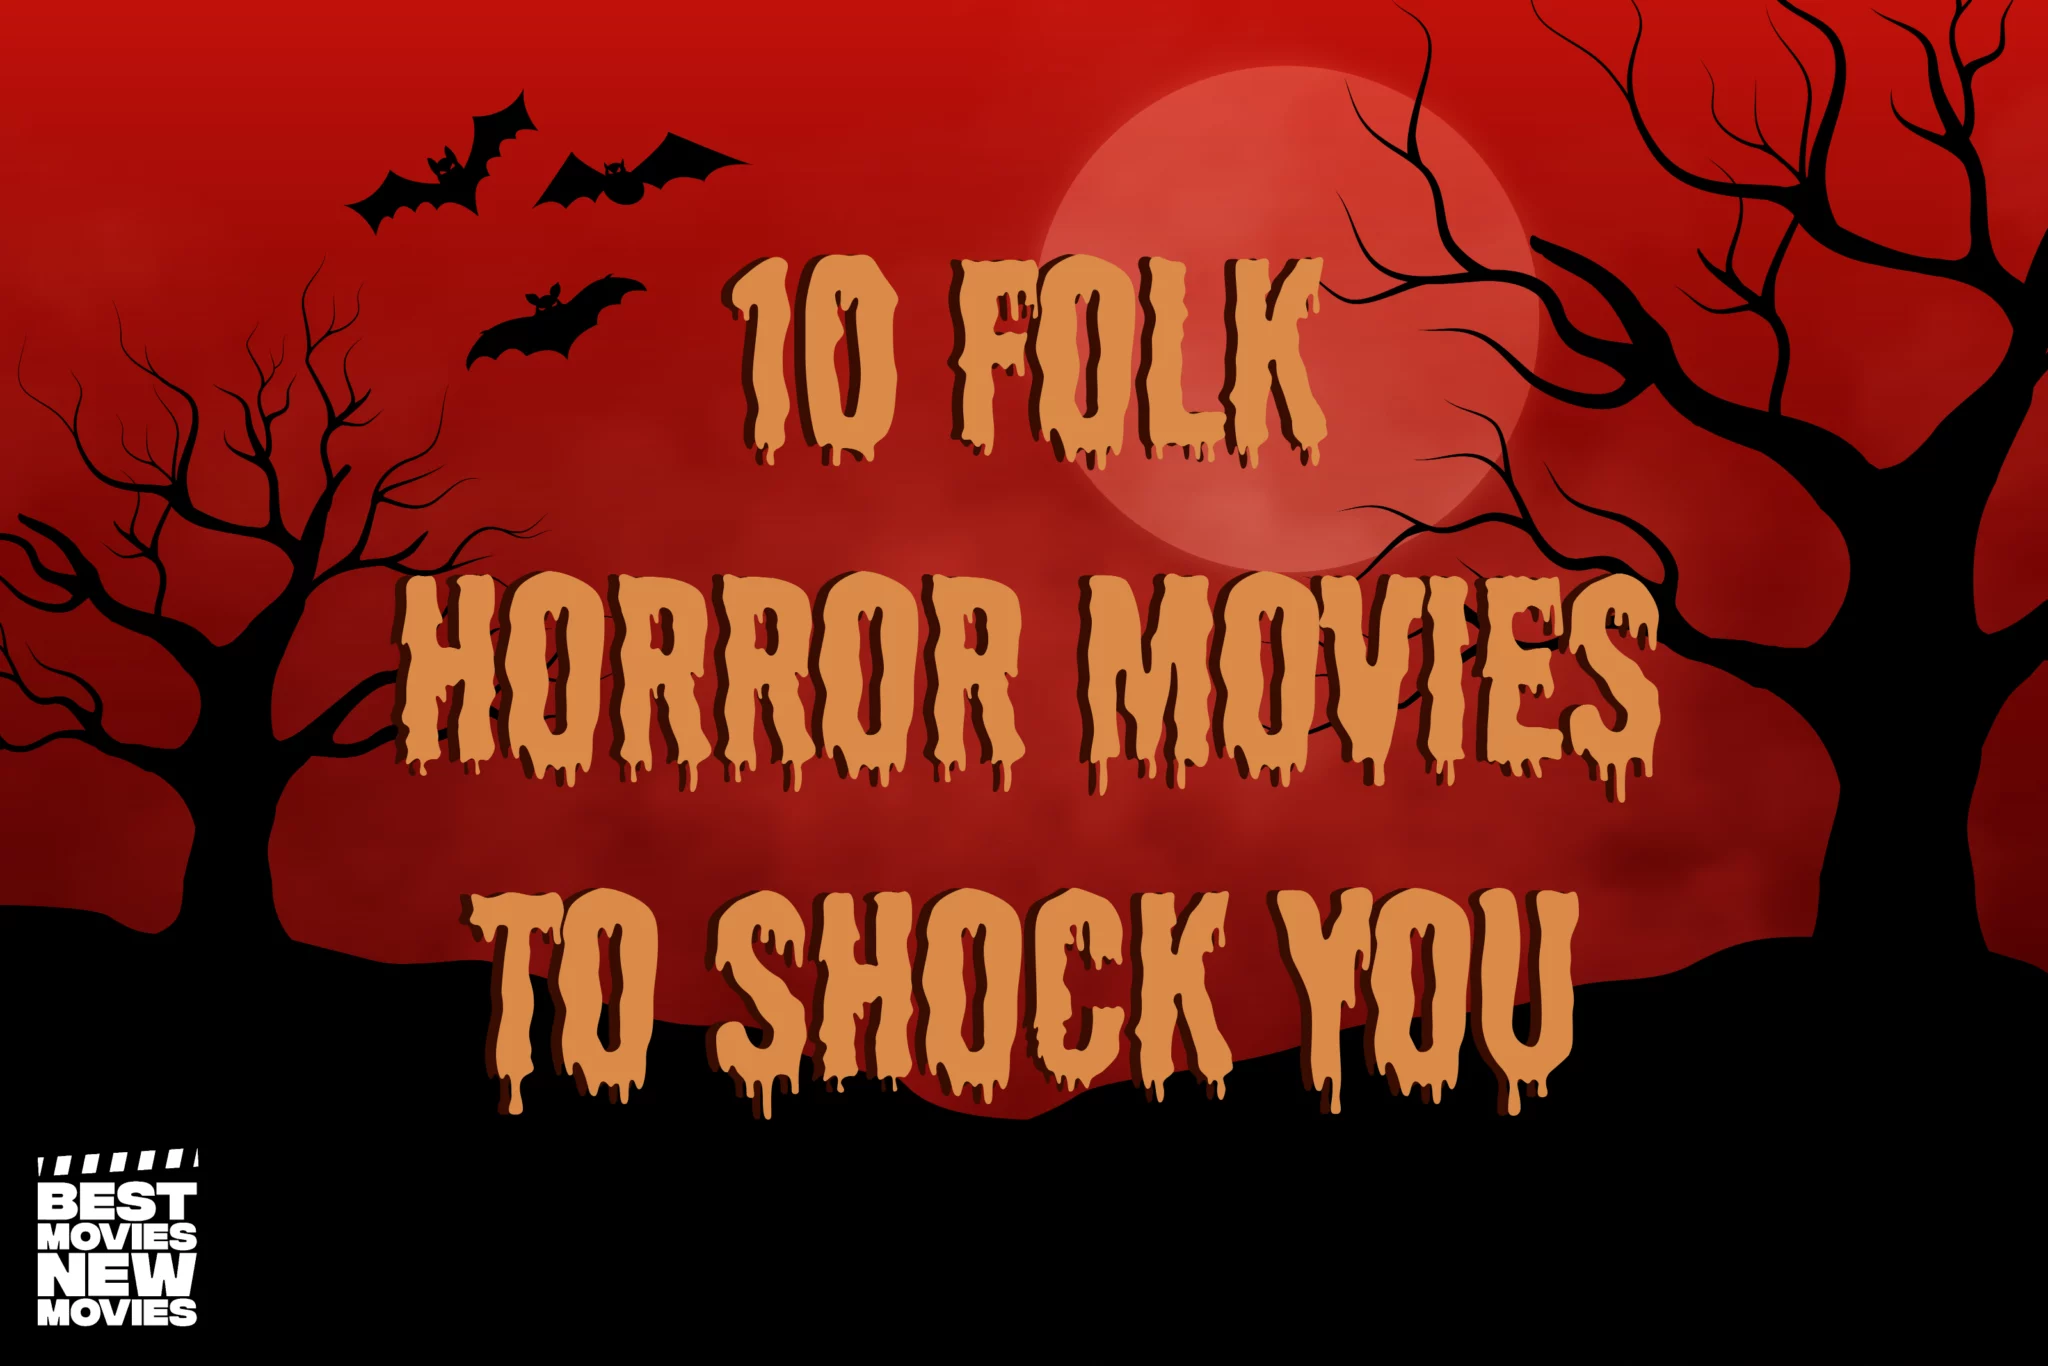 10 Folk Horror Movies to Shock You